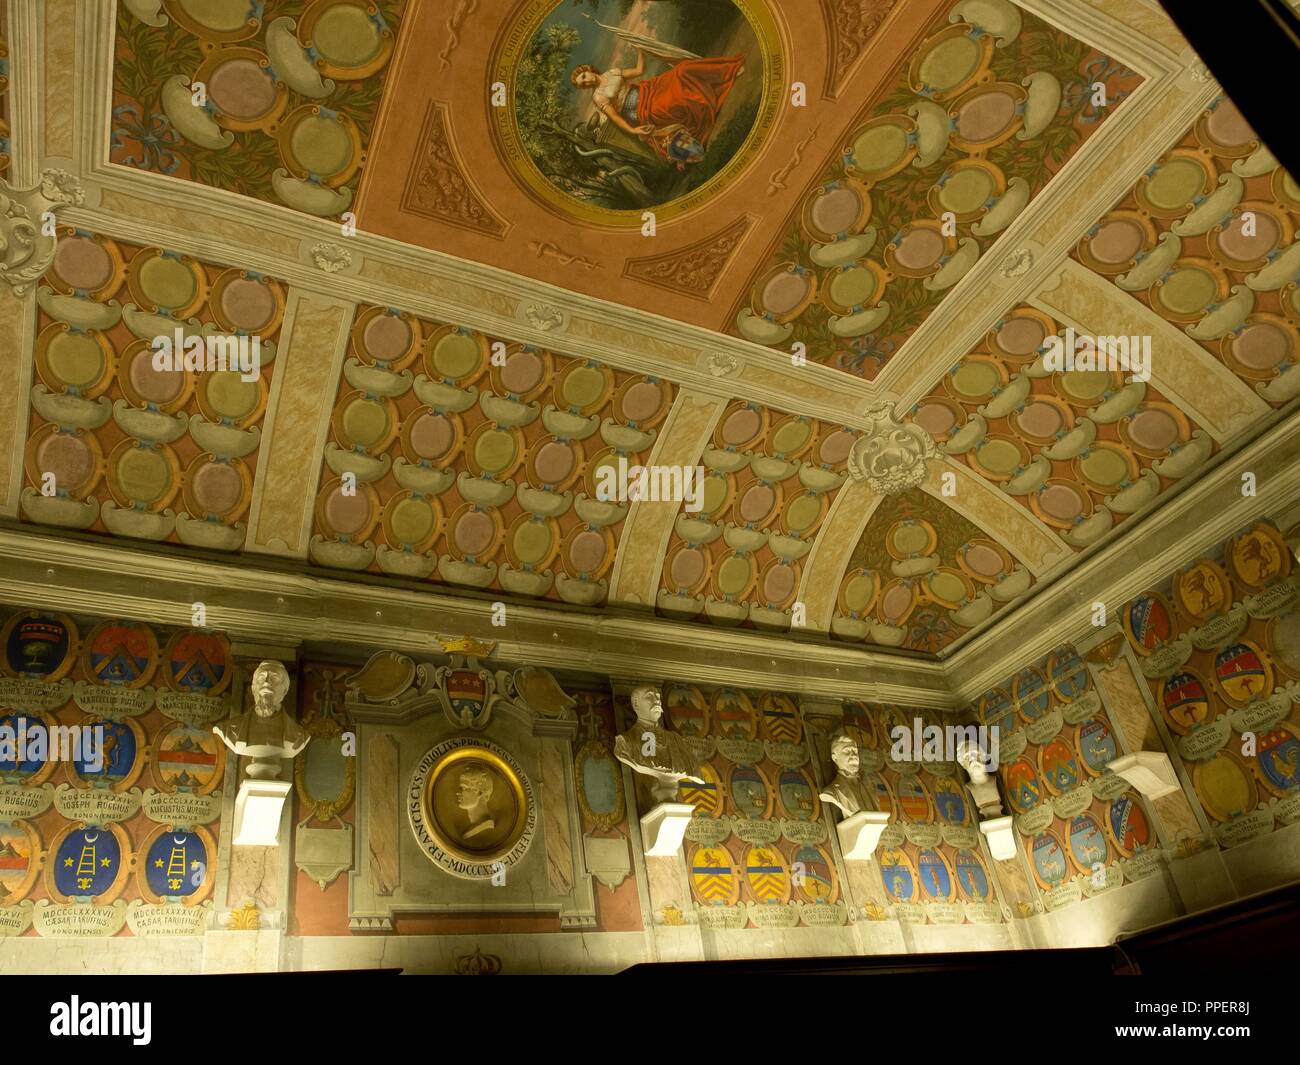 Interior of the Archiginnasio palace, XVI century, Bologna, Italy. Stock Photo